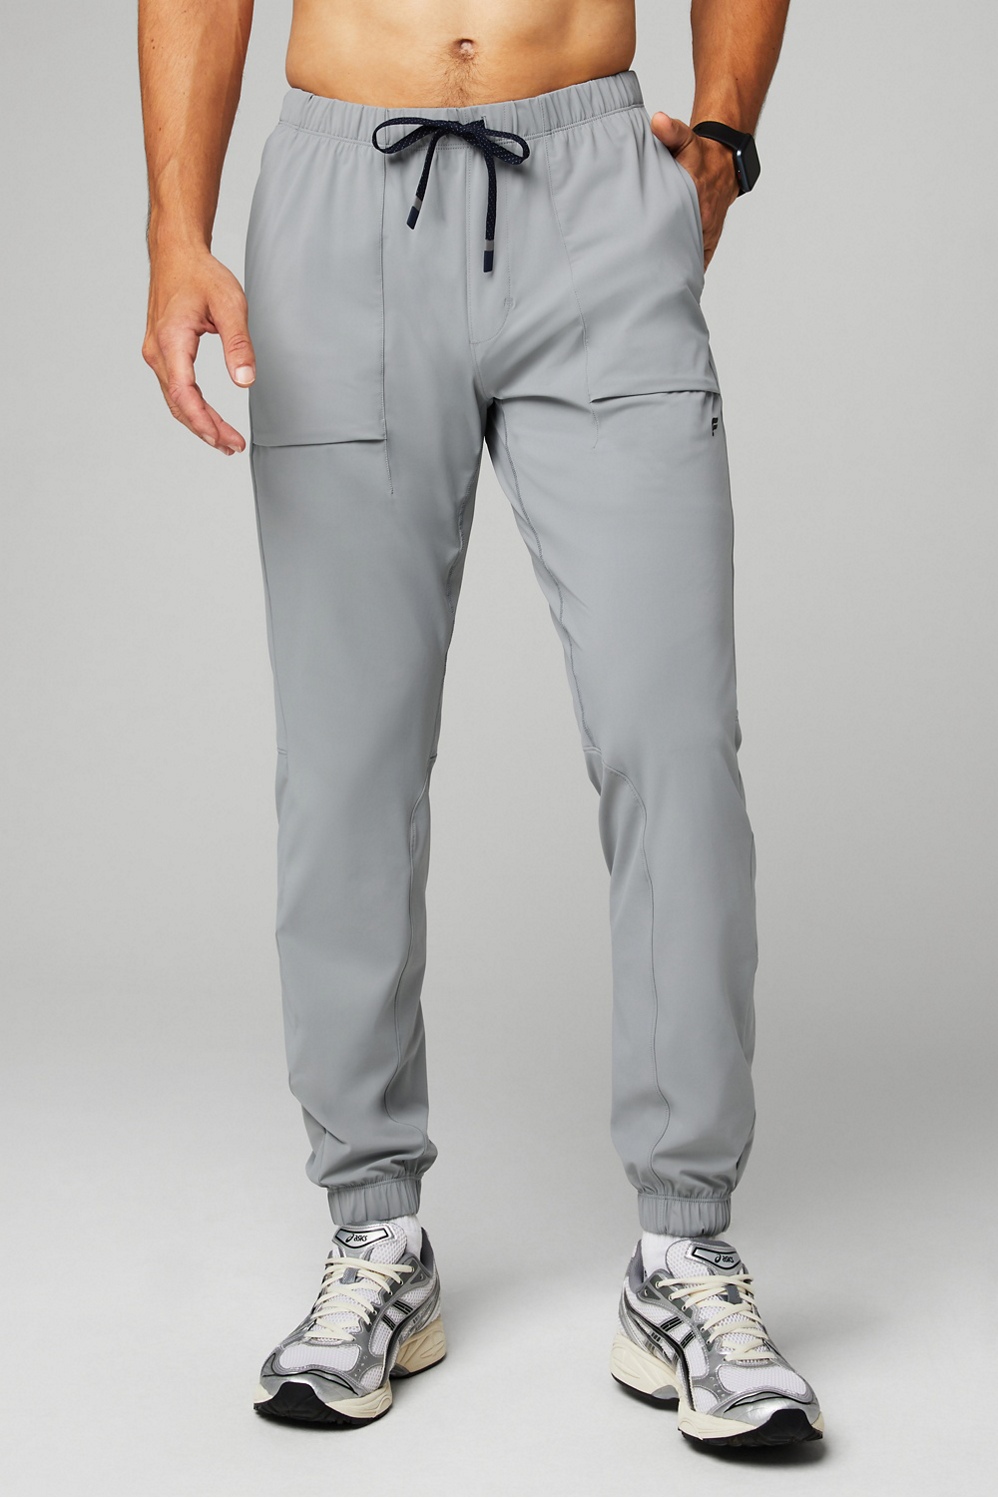 Quality Dark Grey Sweatpant | Get Hingees Grey Joggers